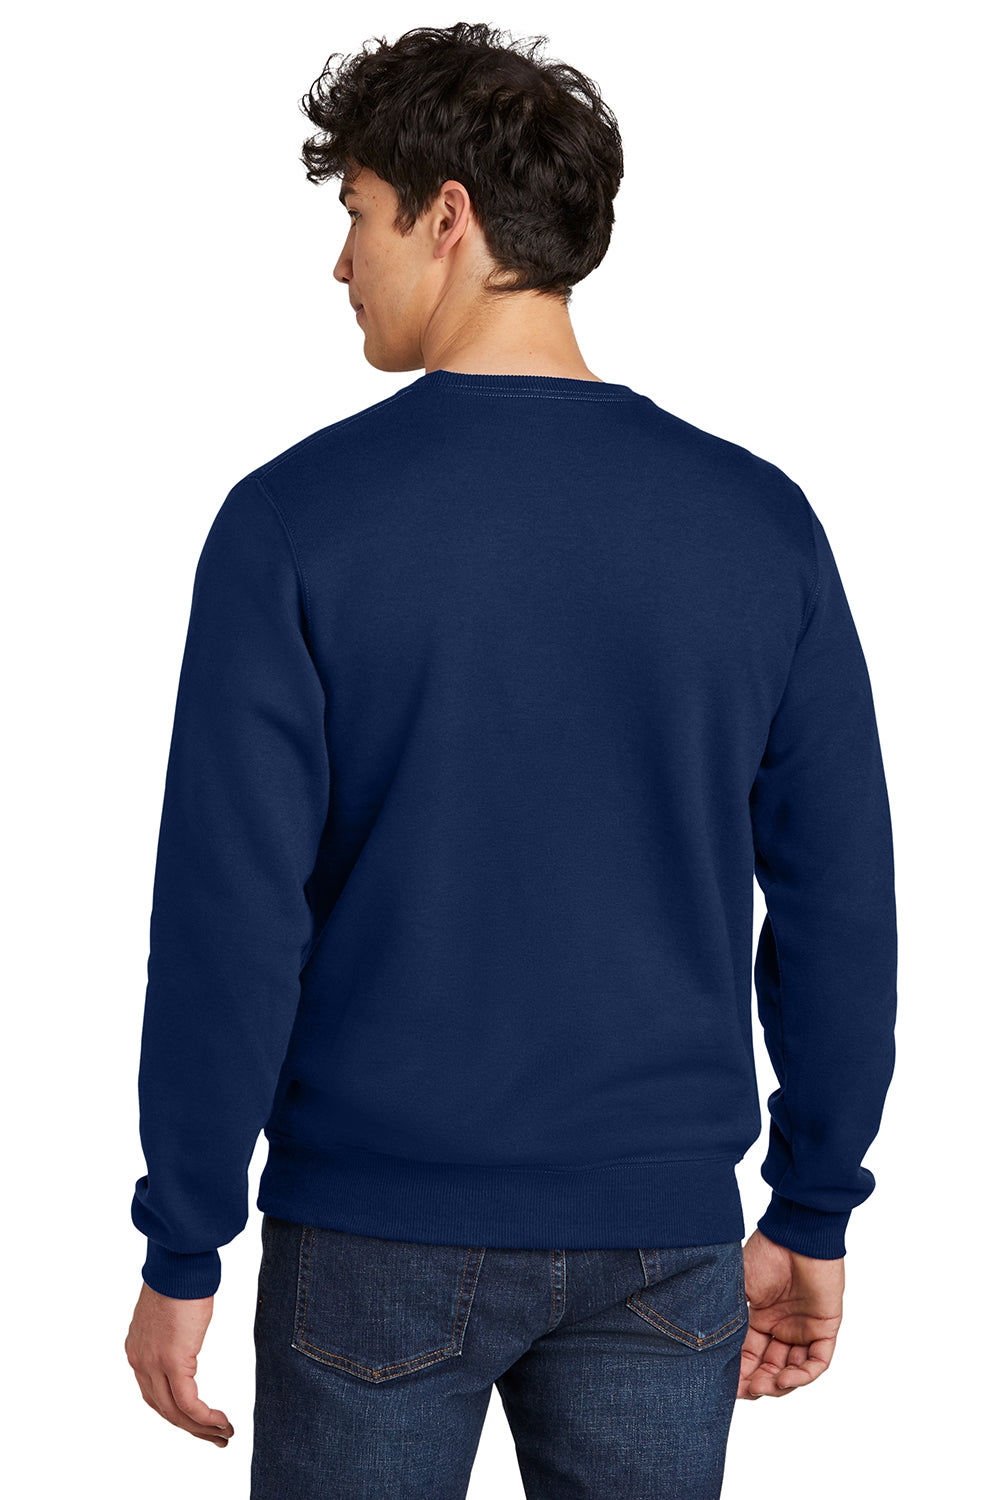 Jerzees 701M Mens Eco Premium Crewneck Sweatshirt Navy Blue Back